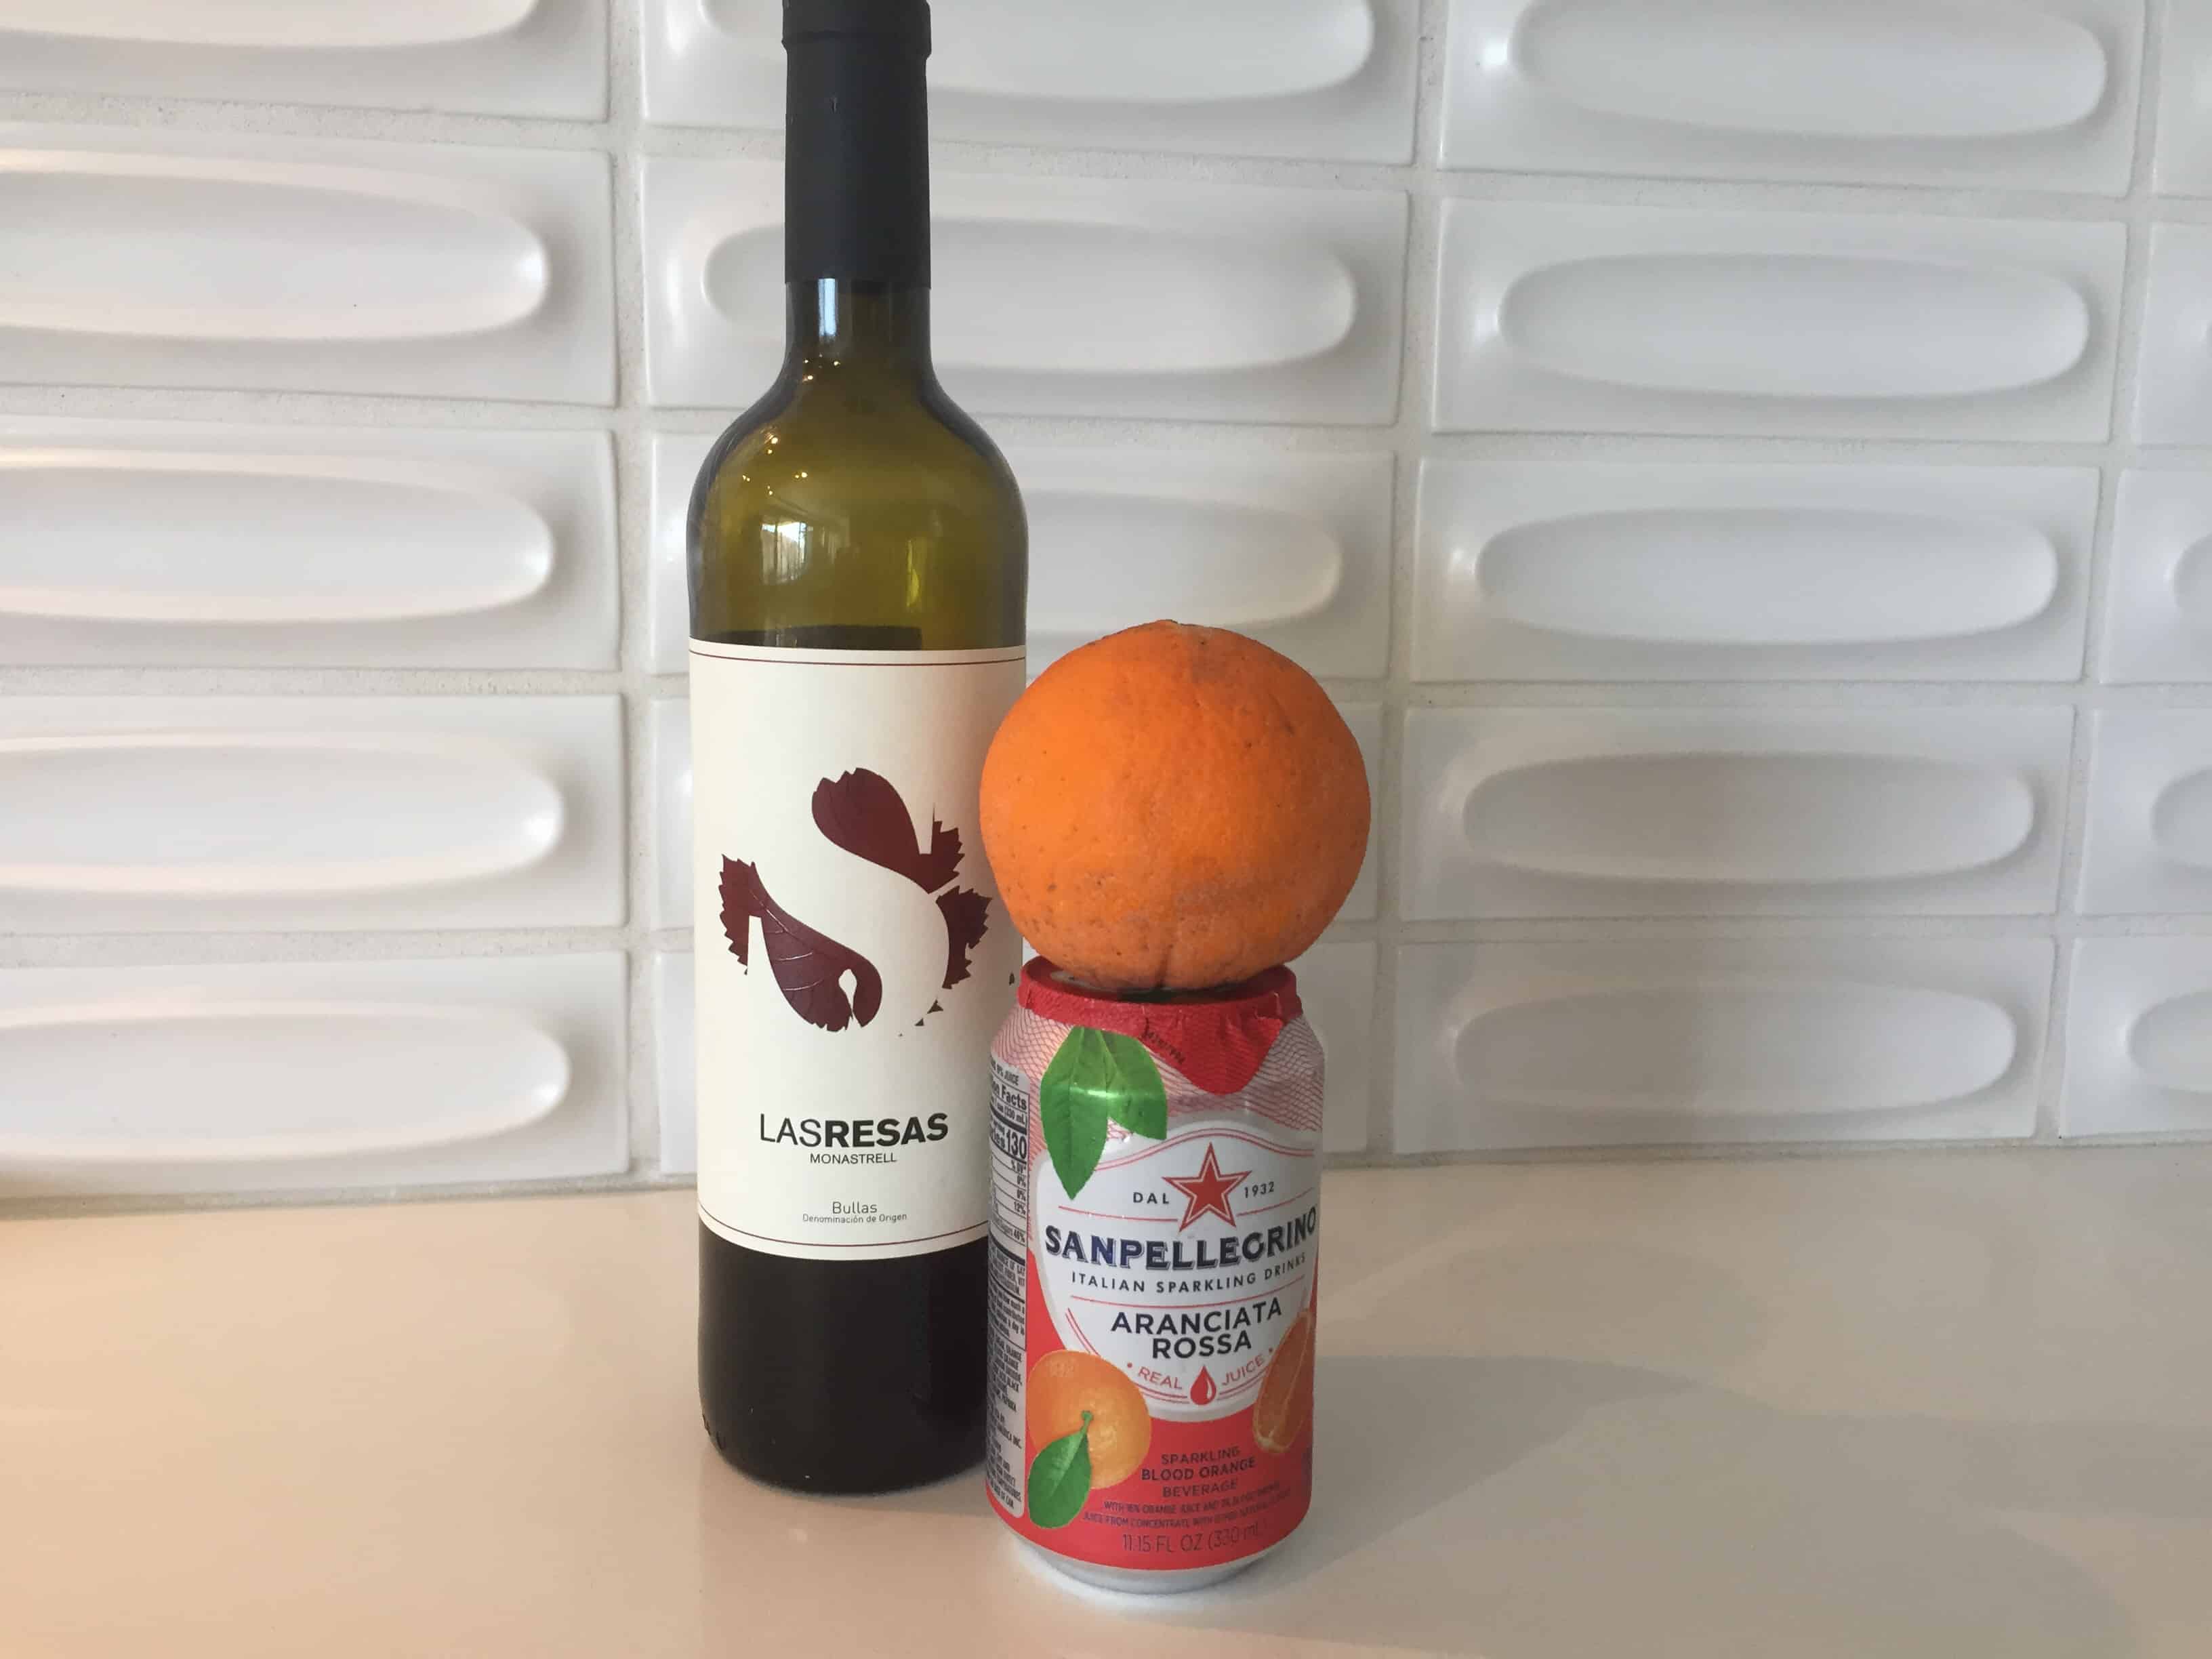 Bottle of Las Resas 2017 Monastrell and can of San Pellegrino blood orange soda.